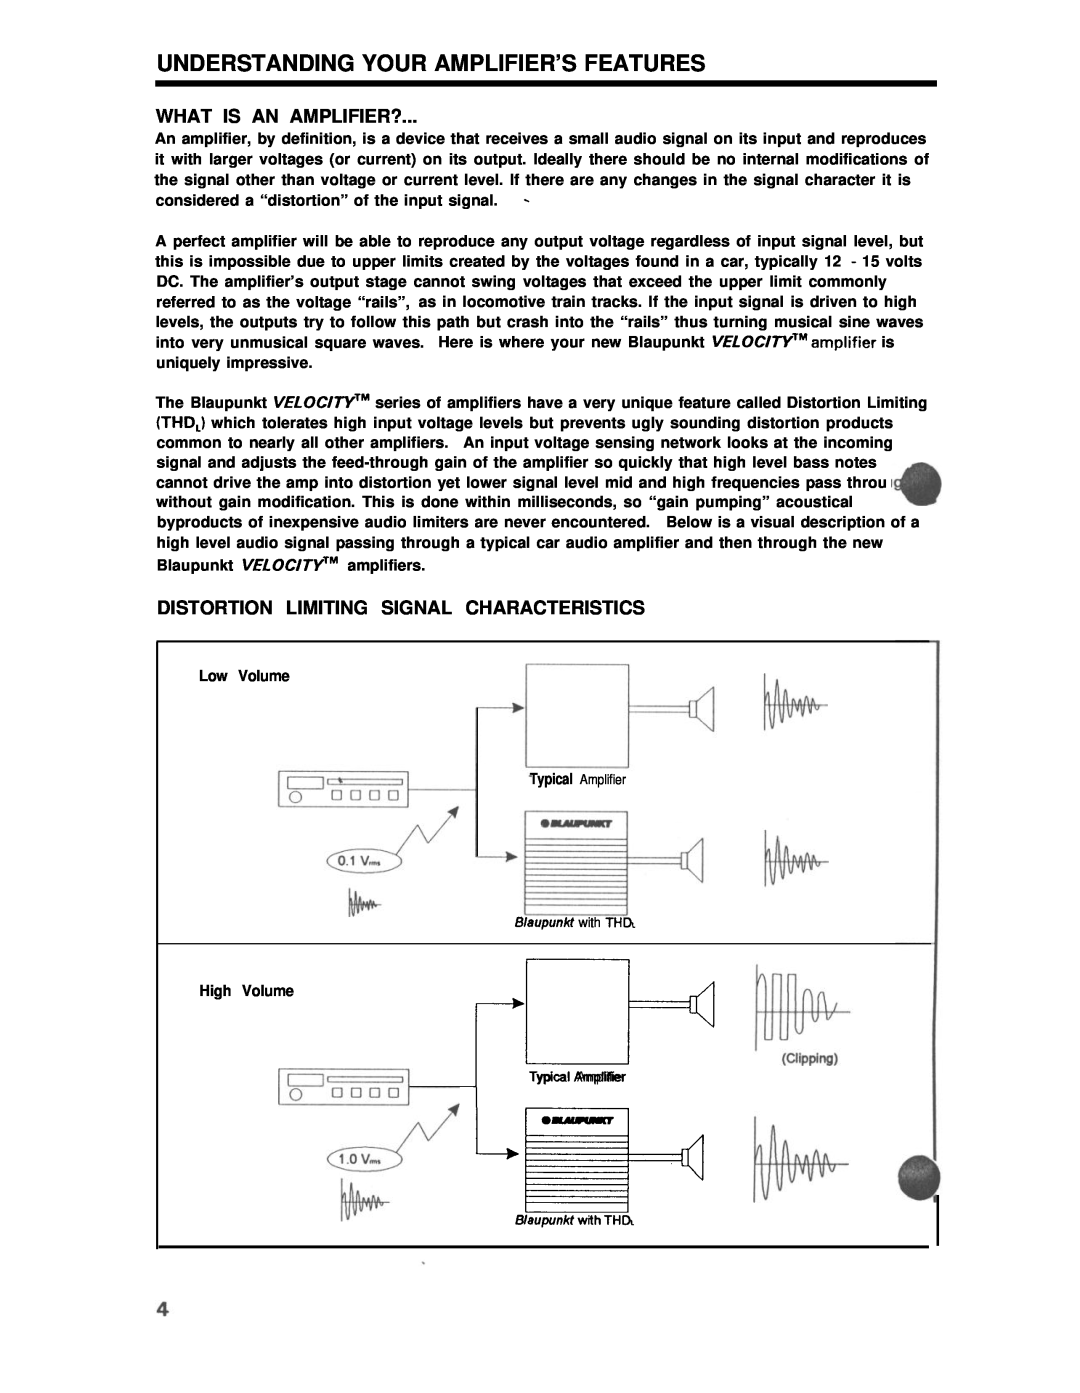 Blaupunkt V7000 Understanding Your Amplifier’S Features, What Is An Amplifier?, Distortion Limiting Signal Characteristics 